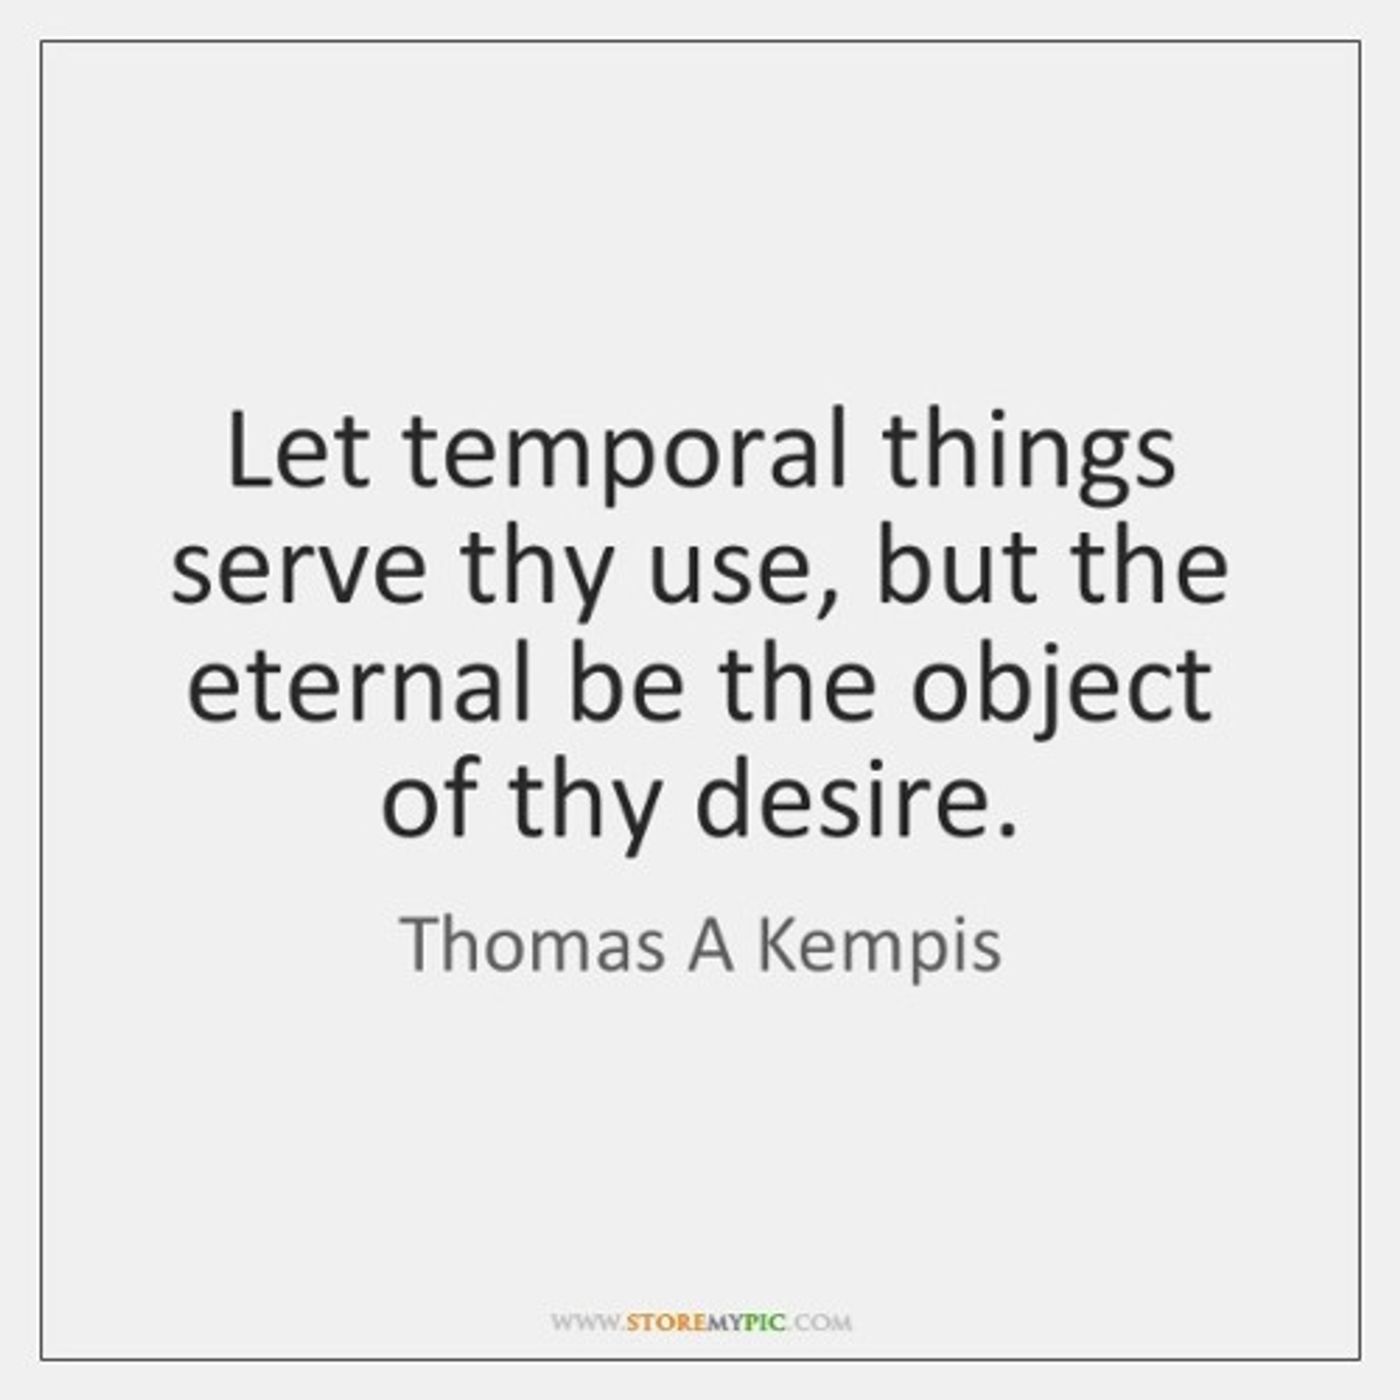 Temporal vs The Eternal